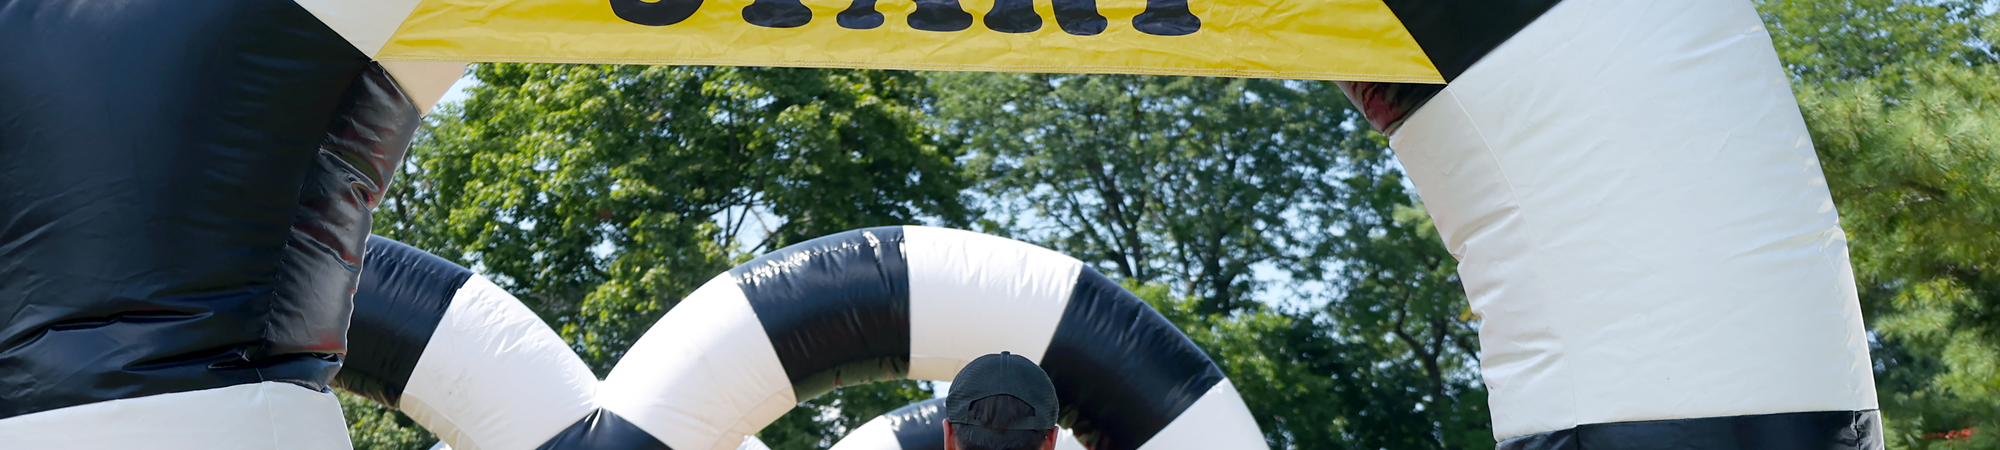 BadgerFest Inflatables